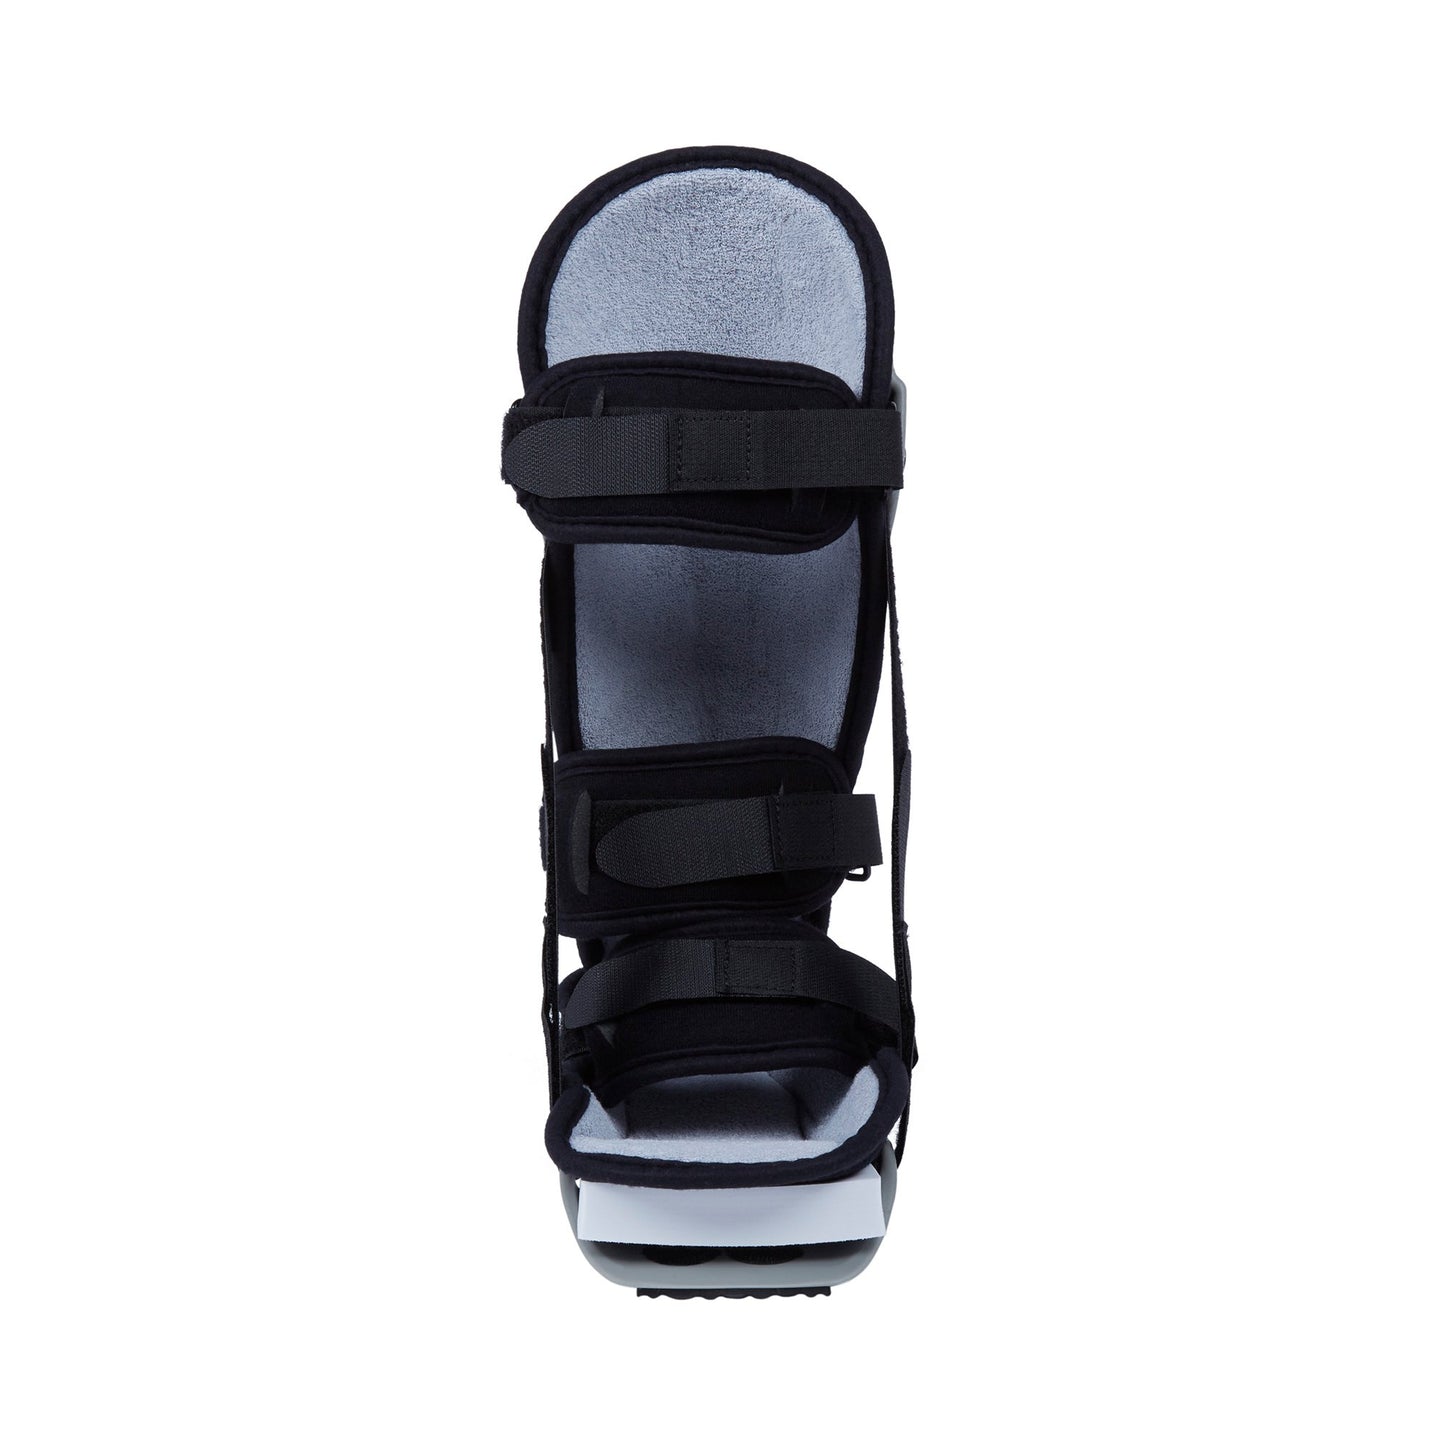 McKesson Adjustable Flexion Straps with Toe Wedge Plantar Fasciitis Night Splint, Small